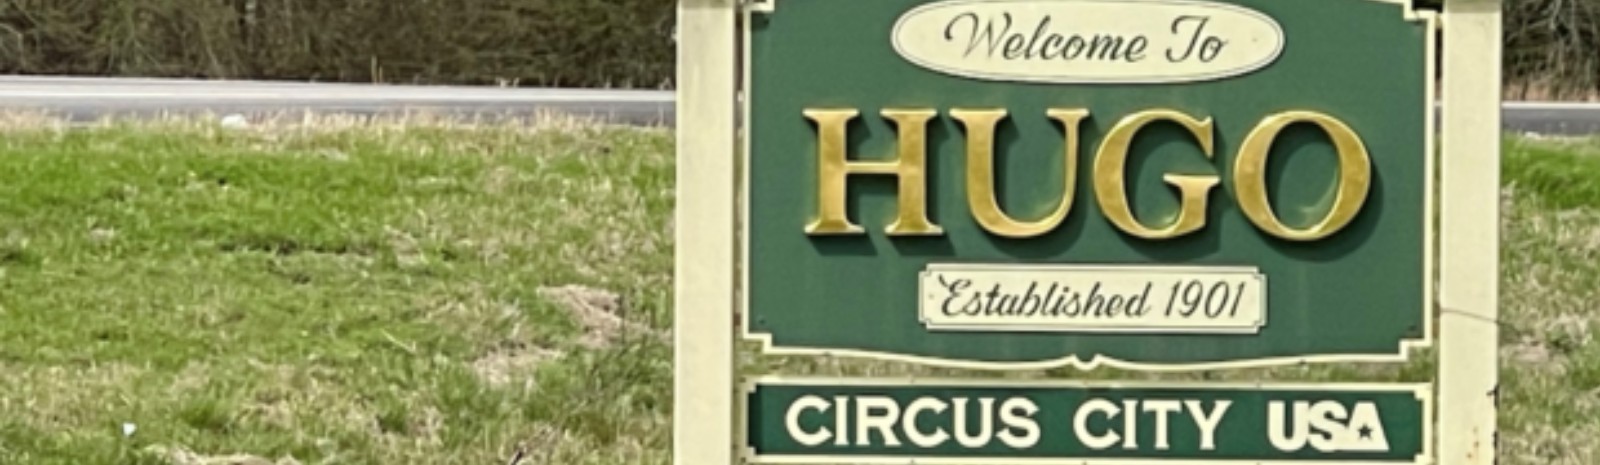 Welcome to Hugo sign.